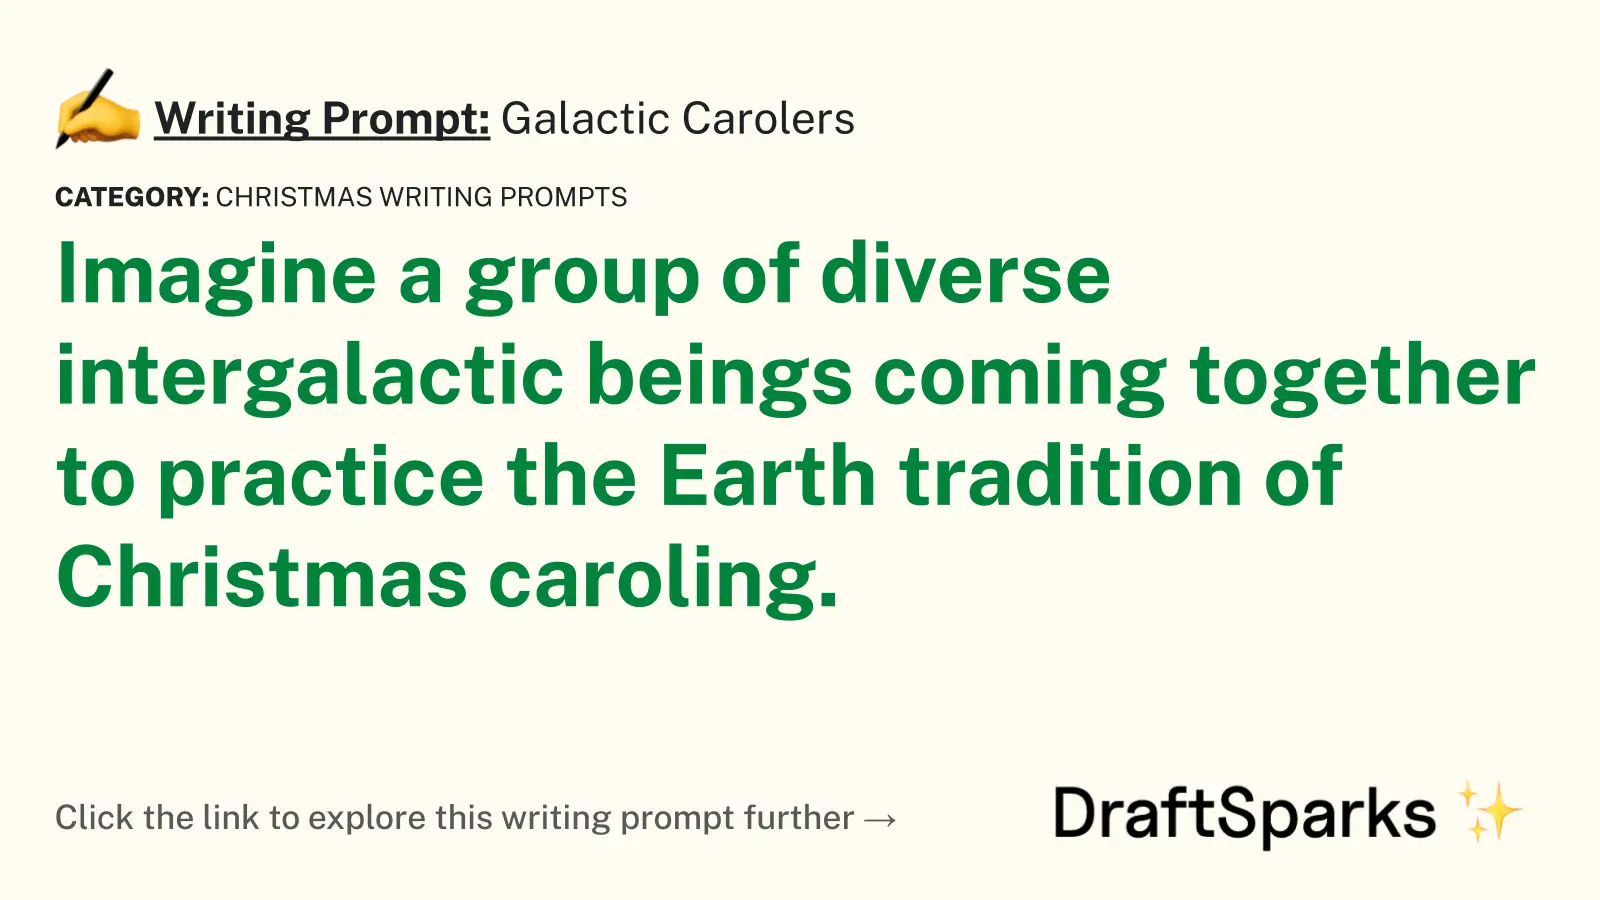 Galactic Carolers